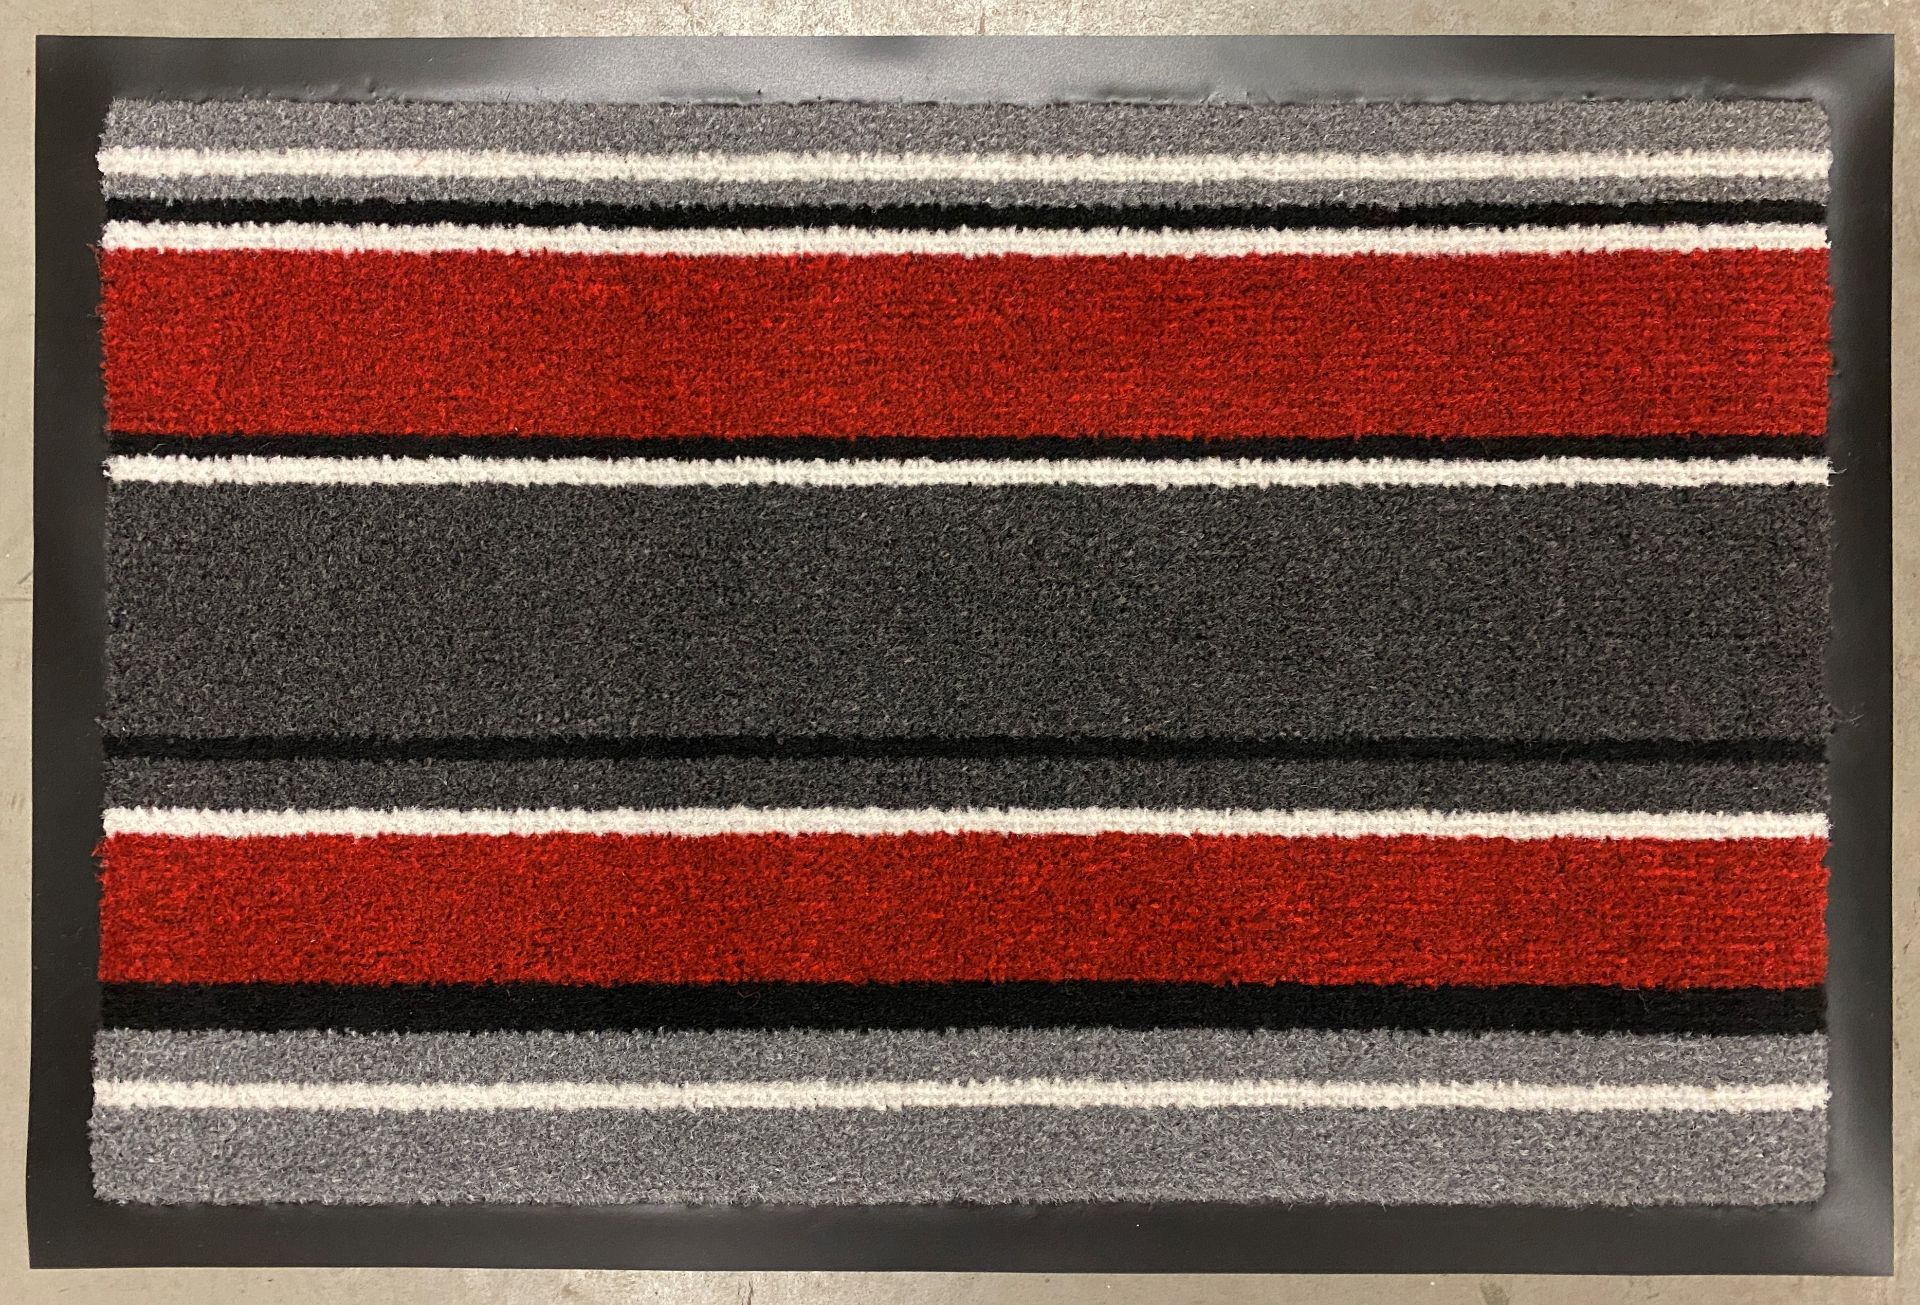 50 x Red/black/grey/white striped barrier mats 60cm x 40cm (D/E05)